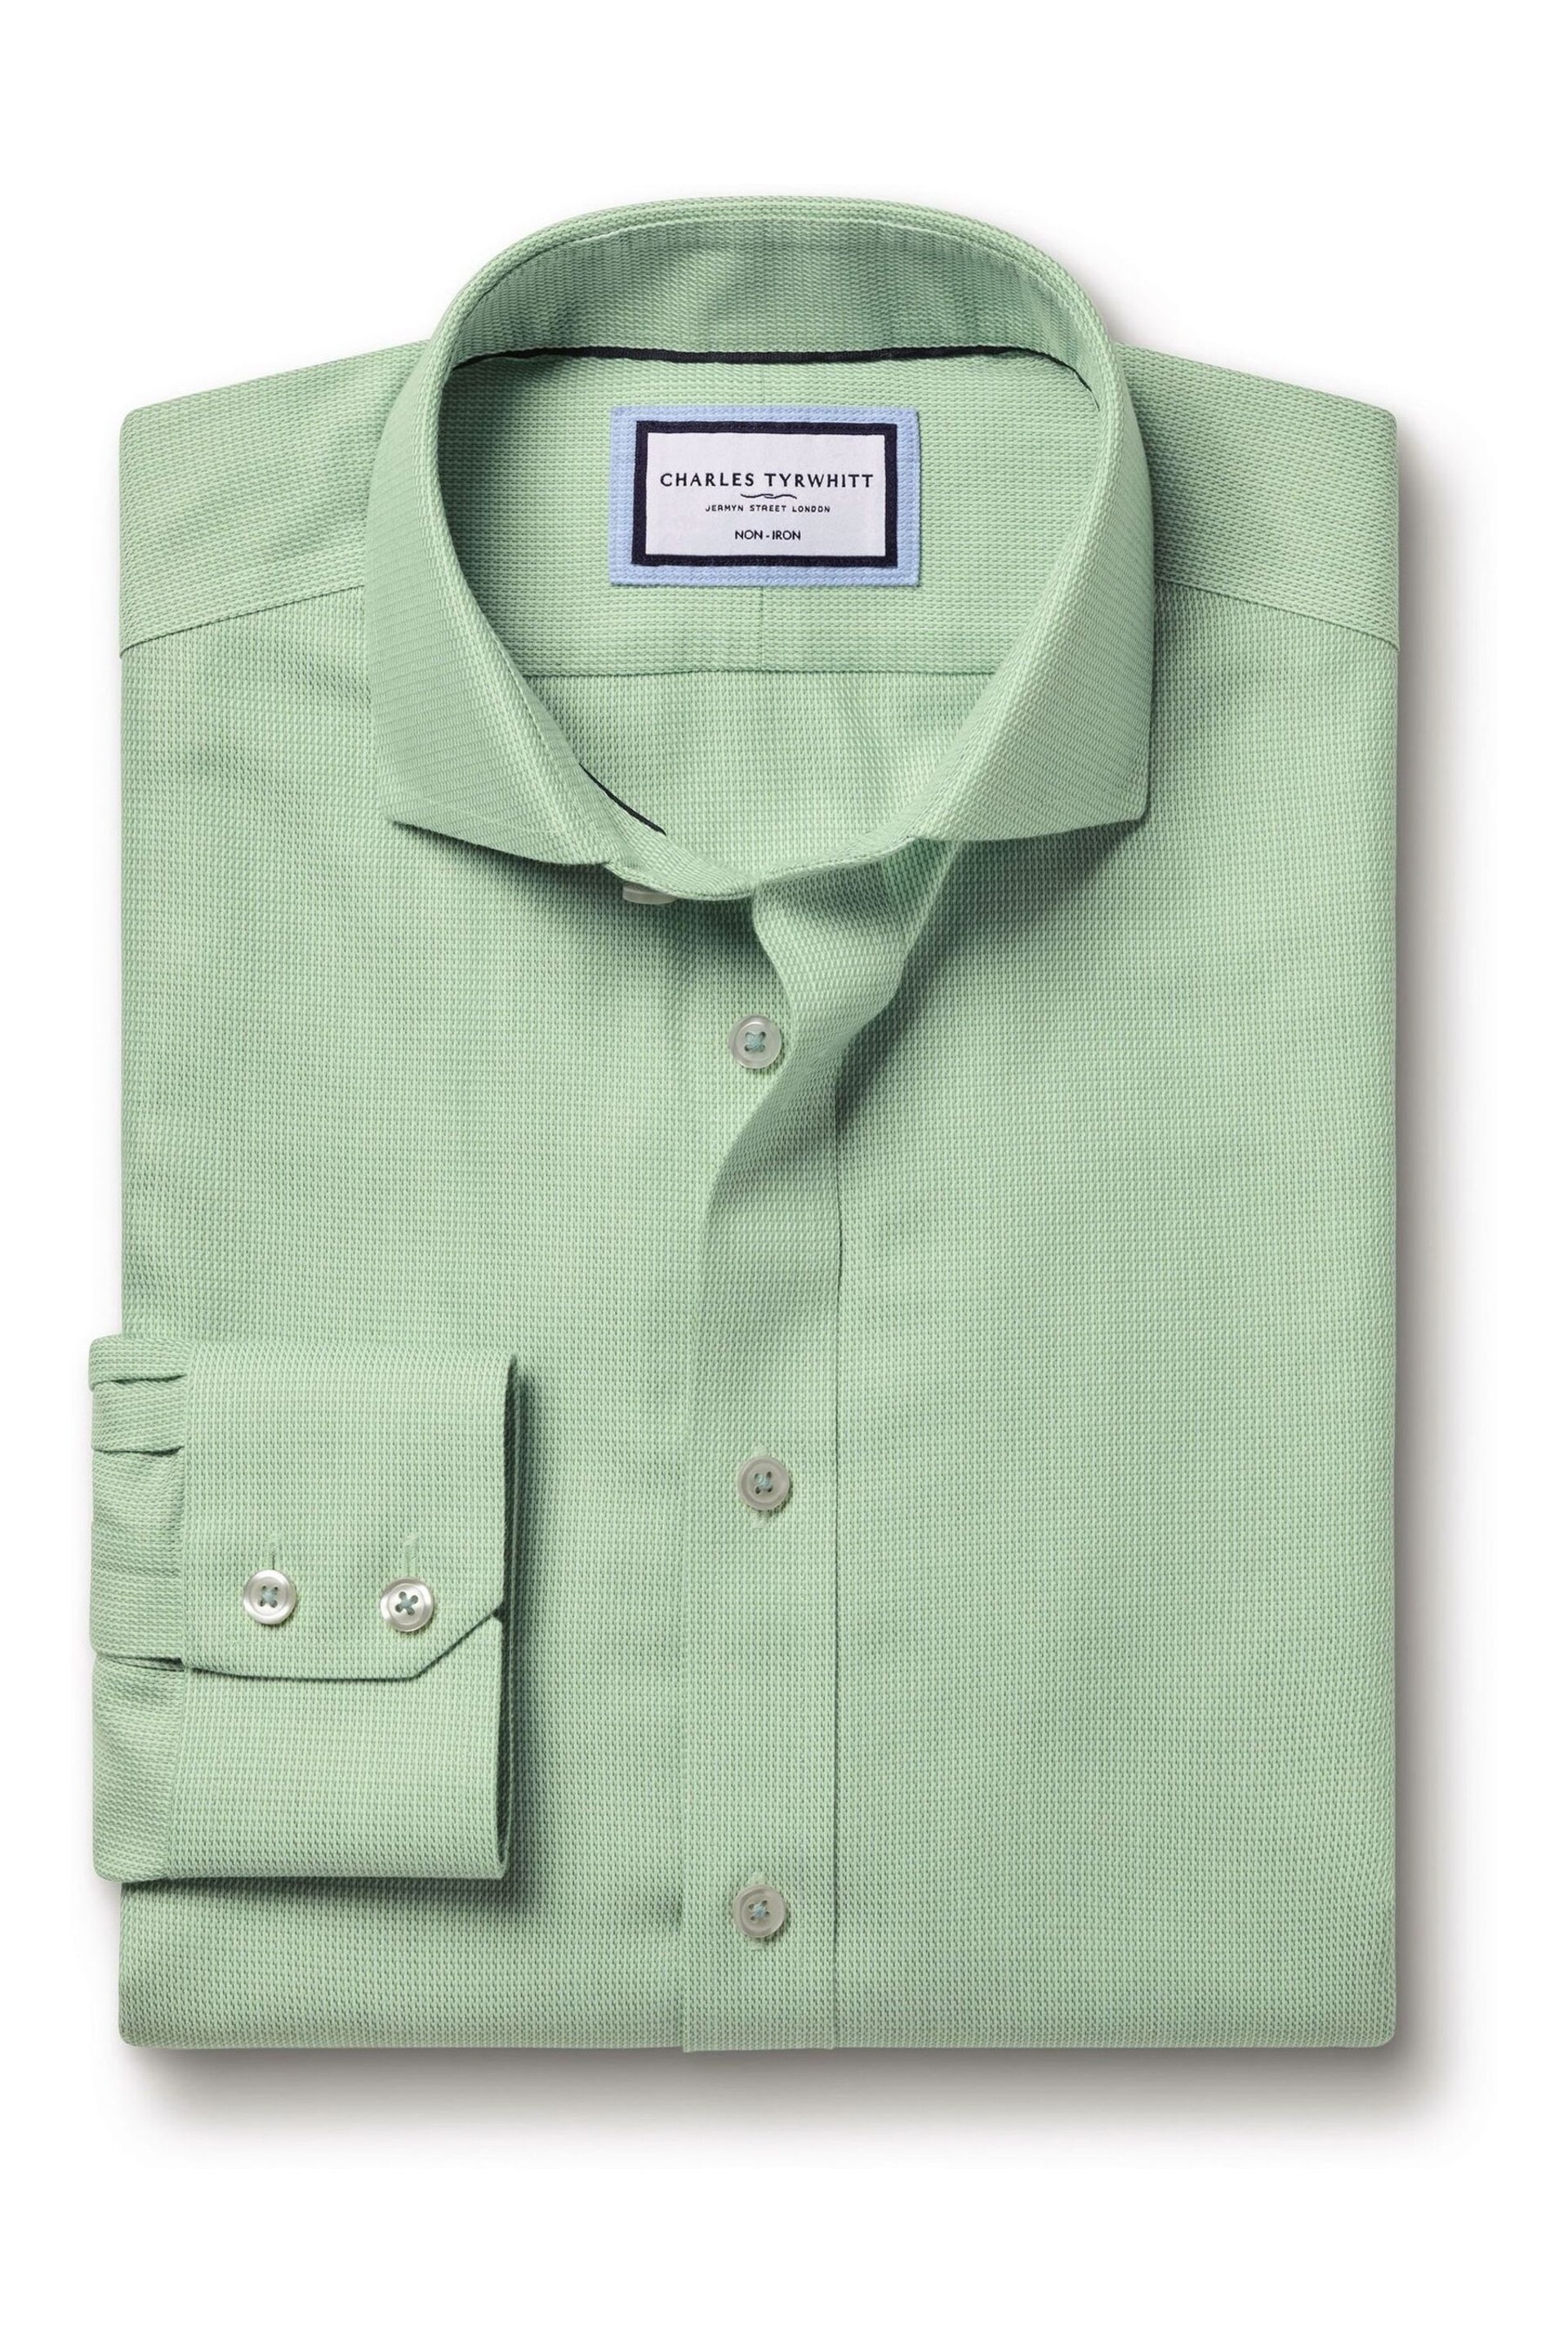 Charles Tyrwhitt Green Non-iron Mayfair Weave Cutaway Slim Fit Shirt - Image 4 of 6